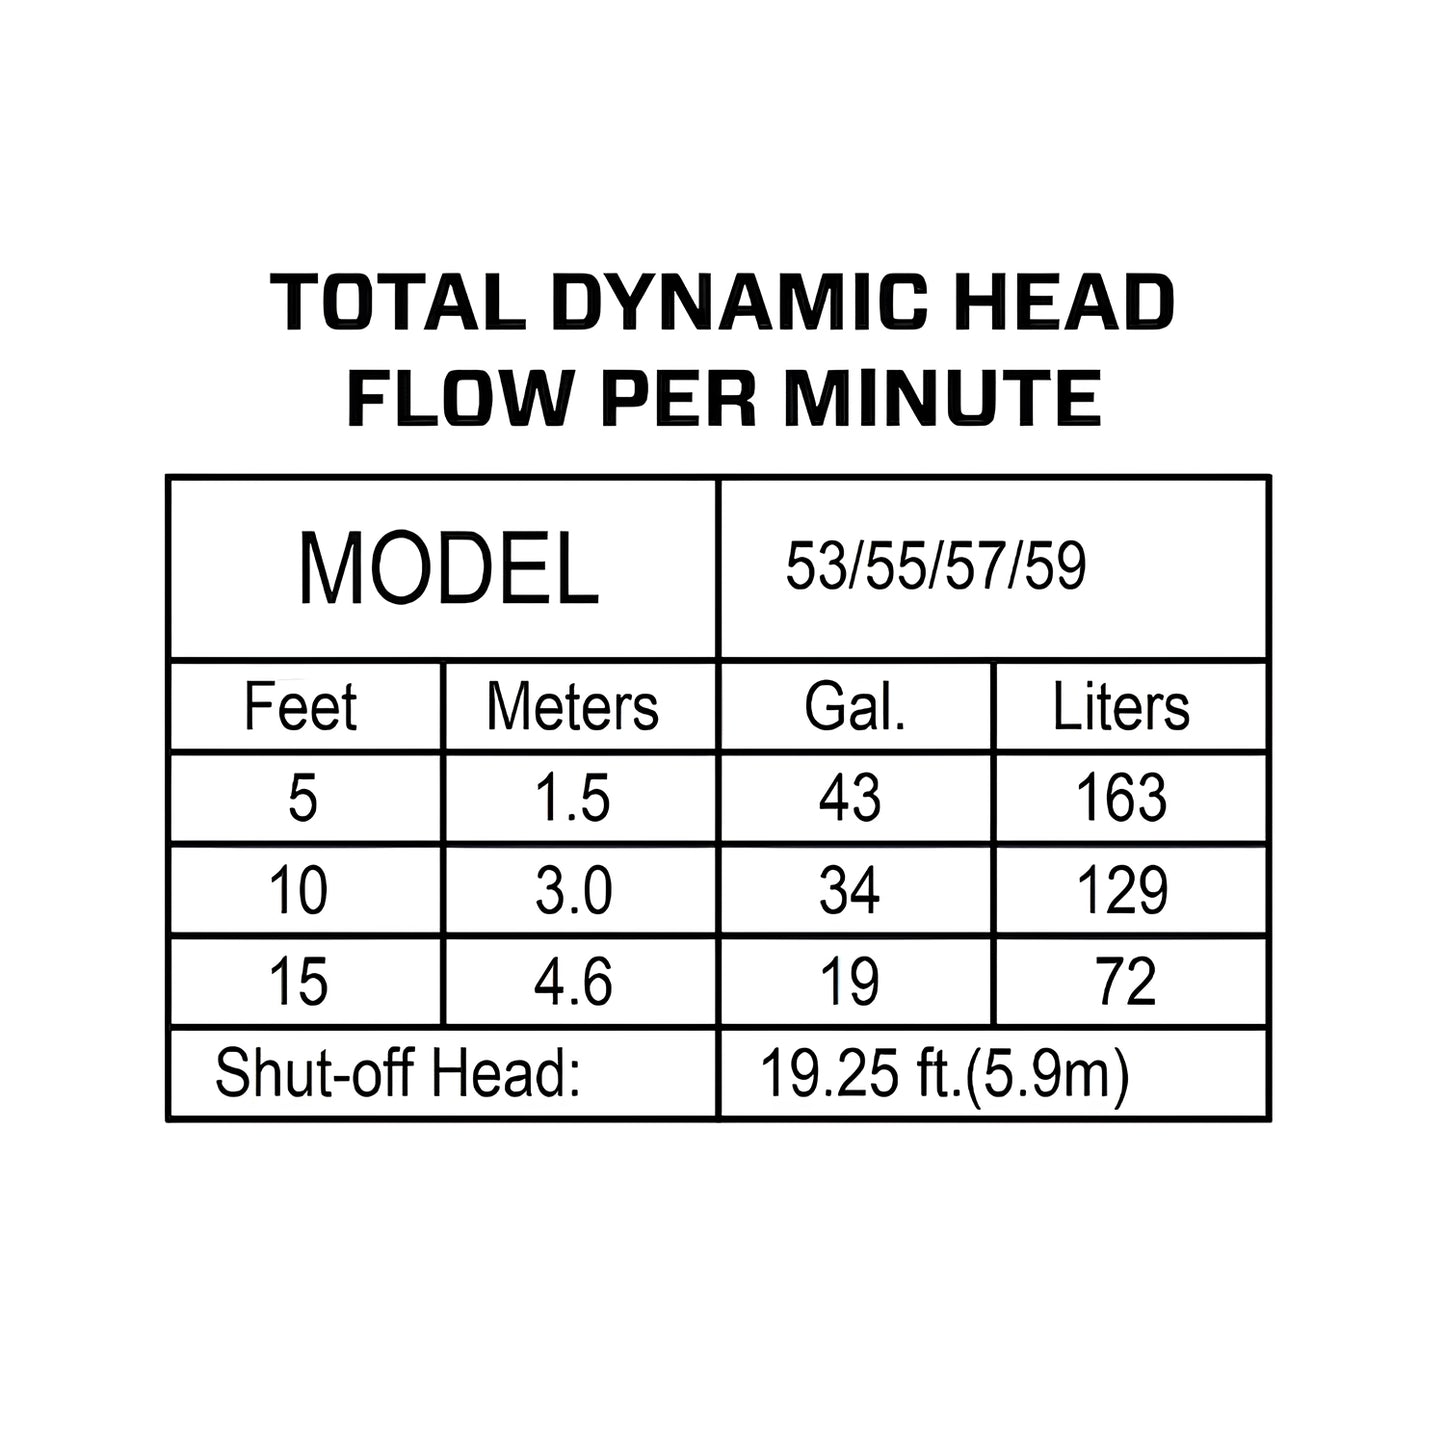 Total dynamic head flow per minute